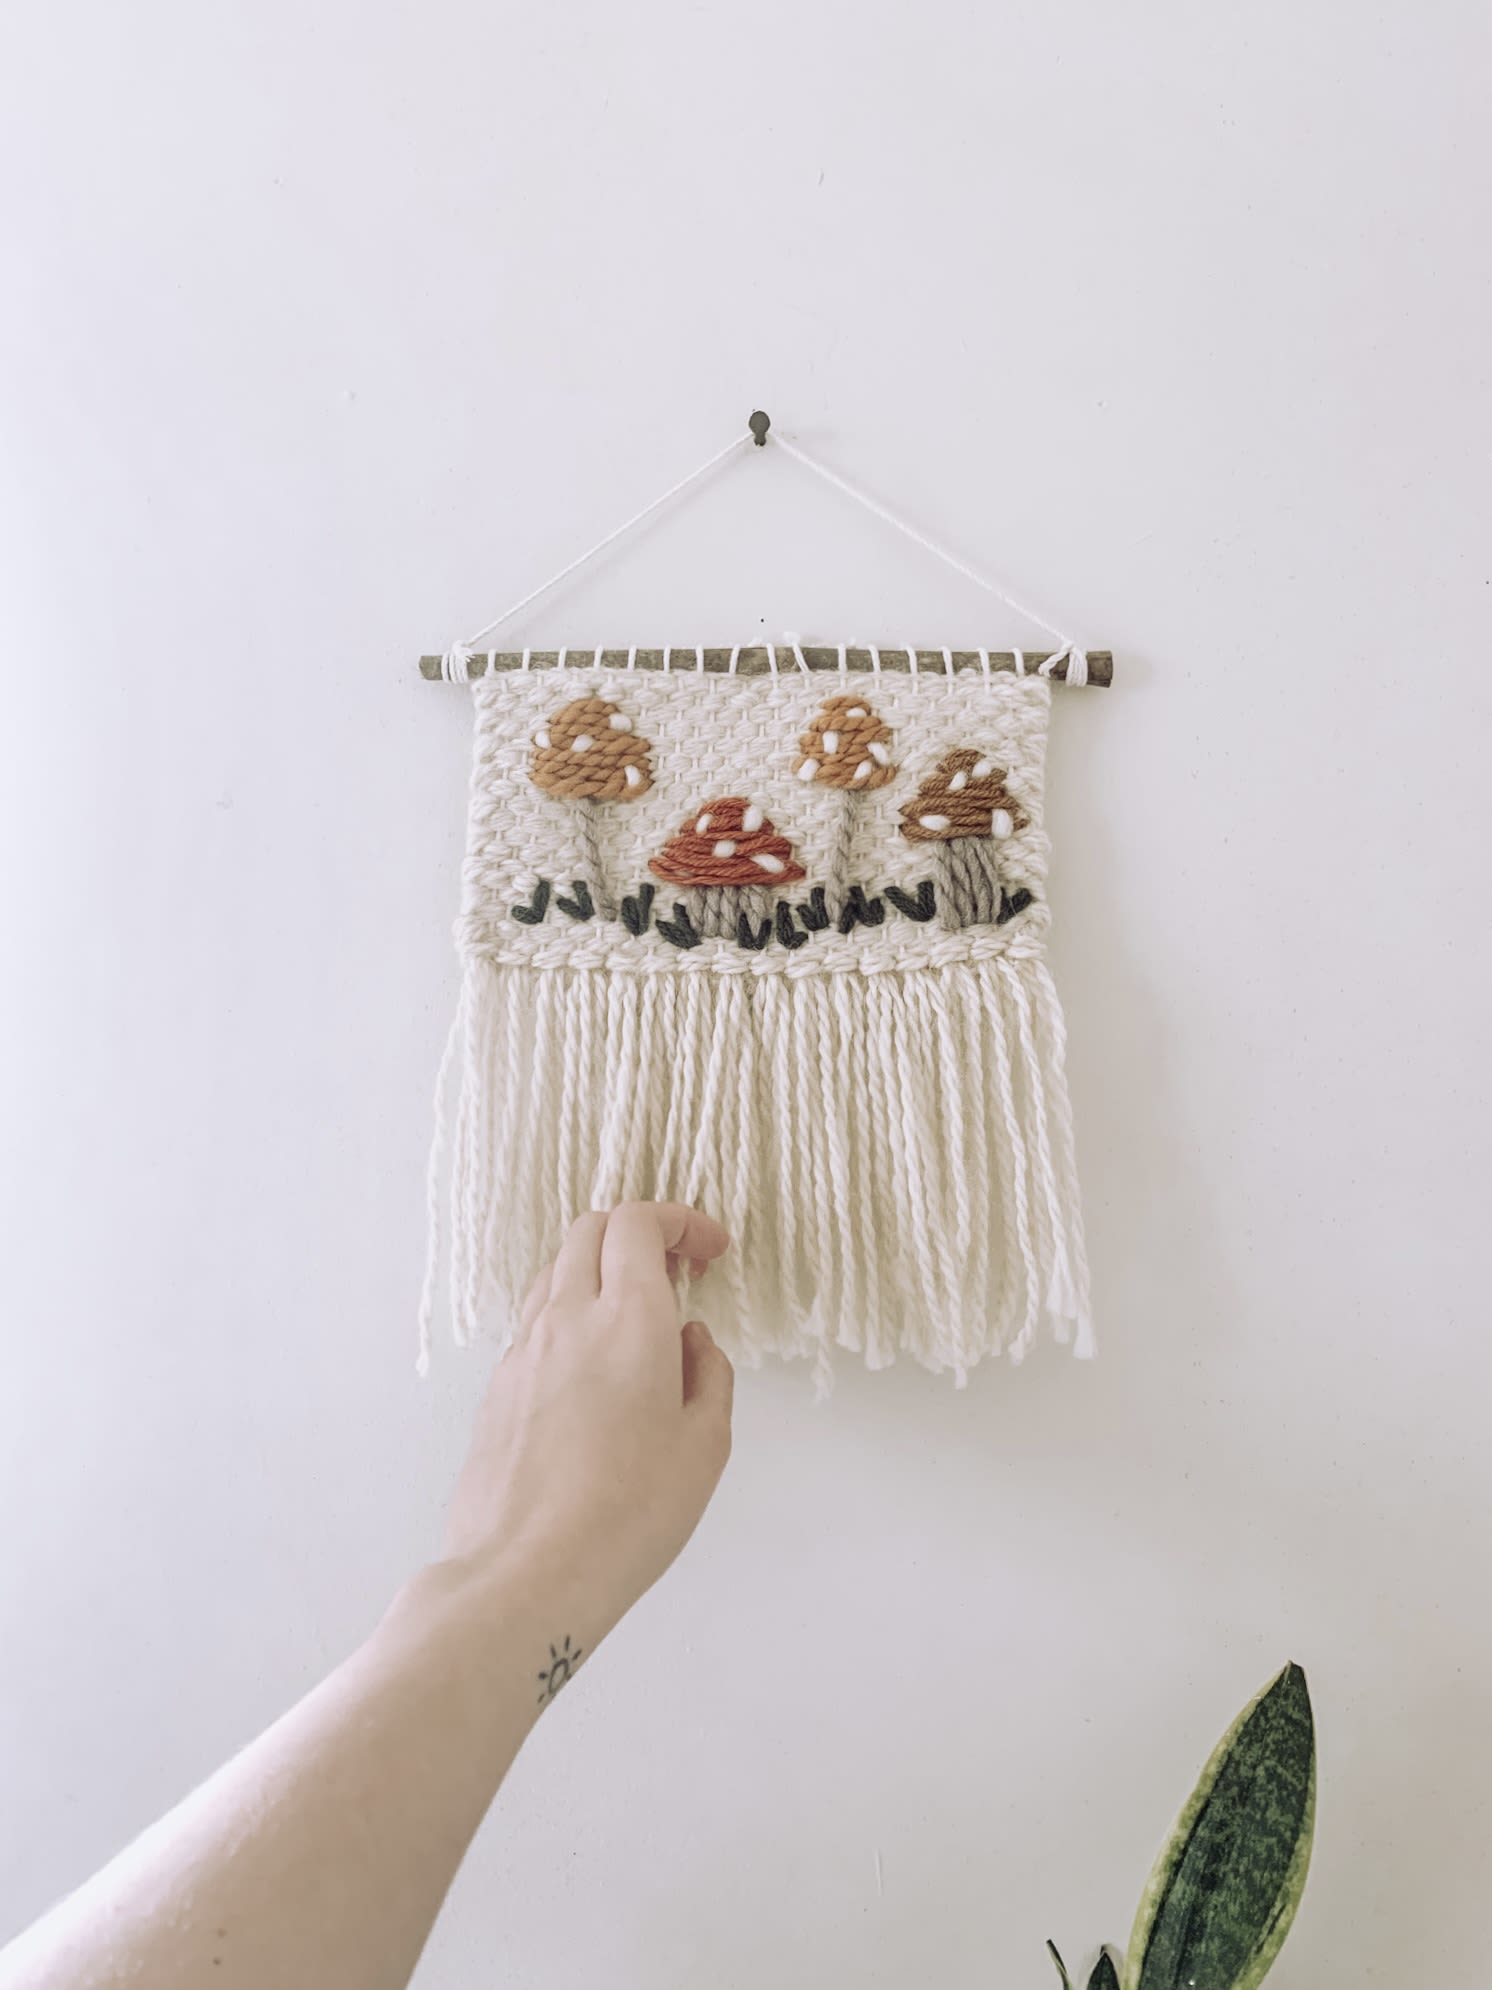 Large Handmade Textured Yarn Wall Hanging Decor - Boho Style by Hippie &  Fringe